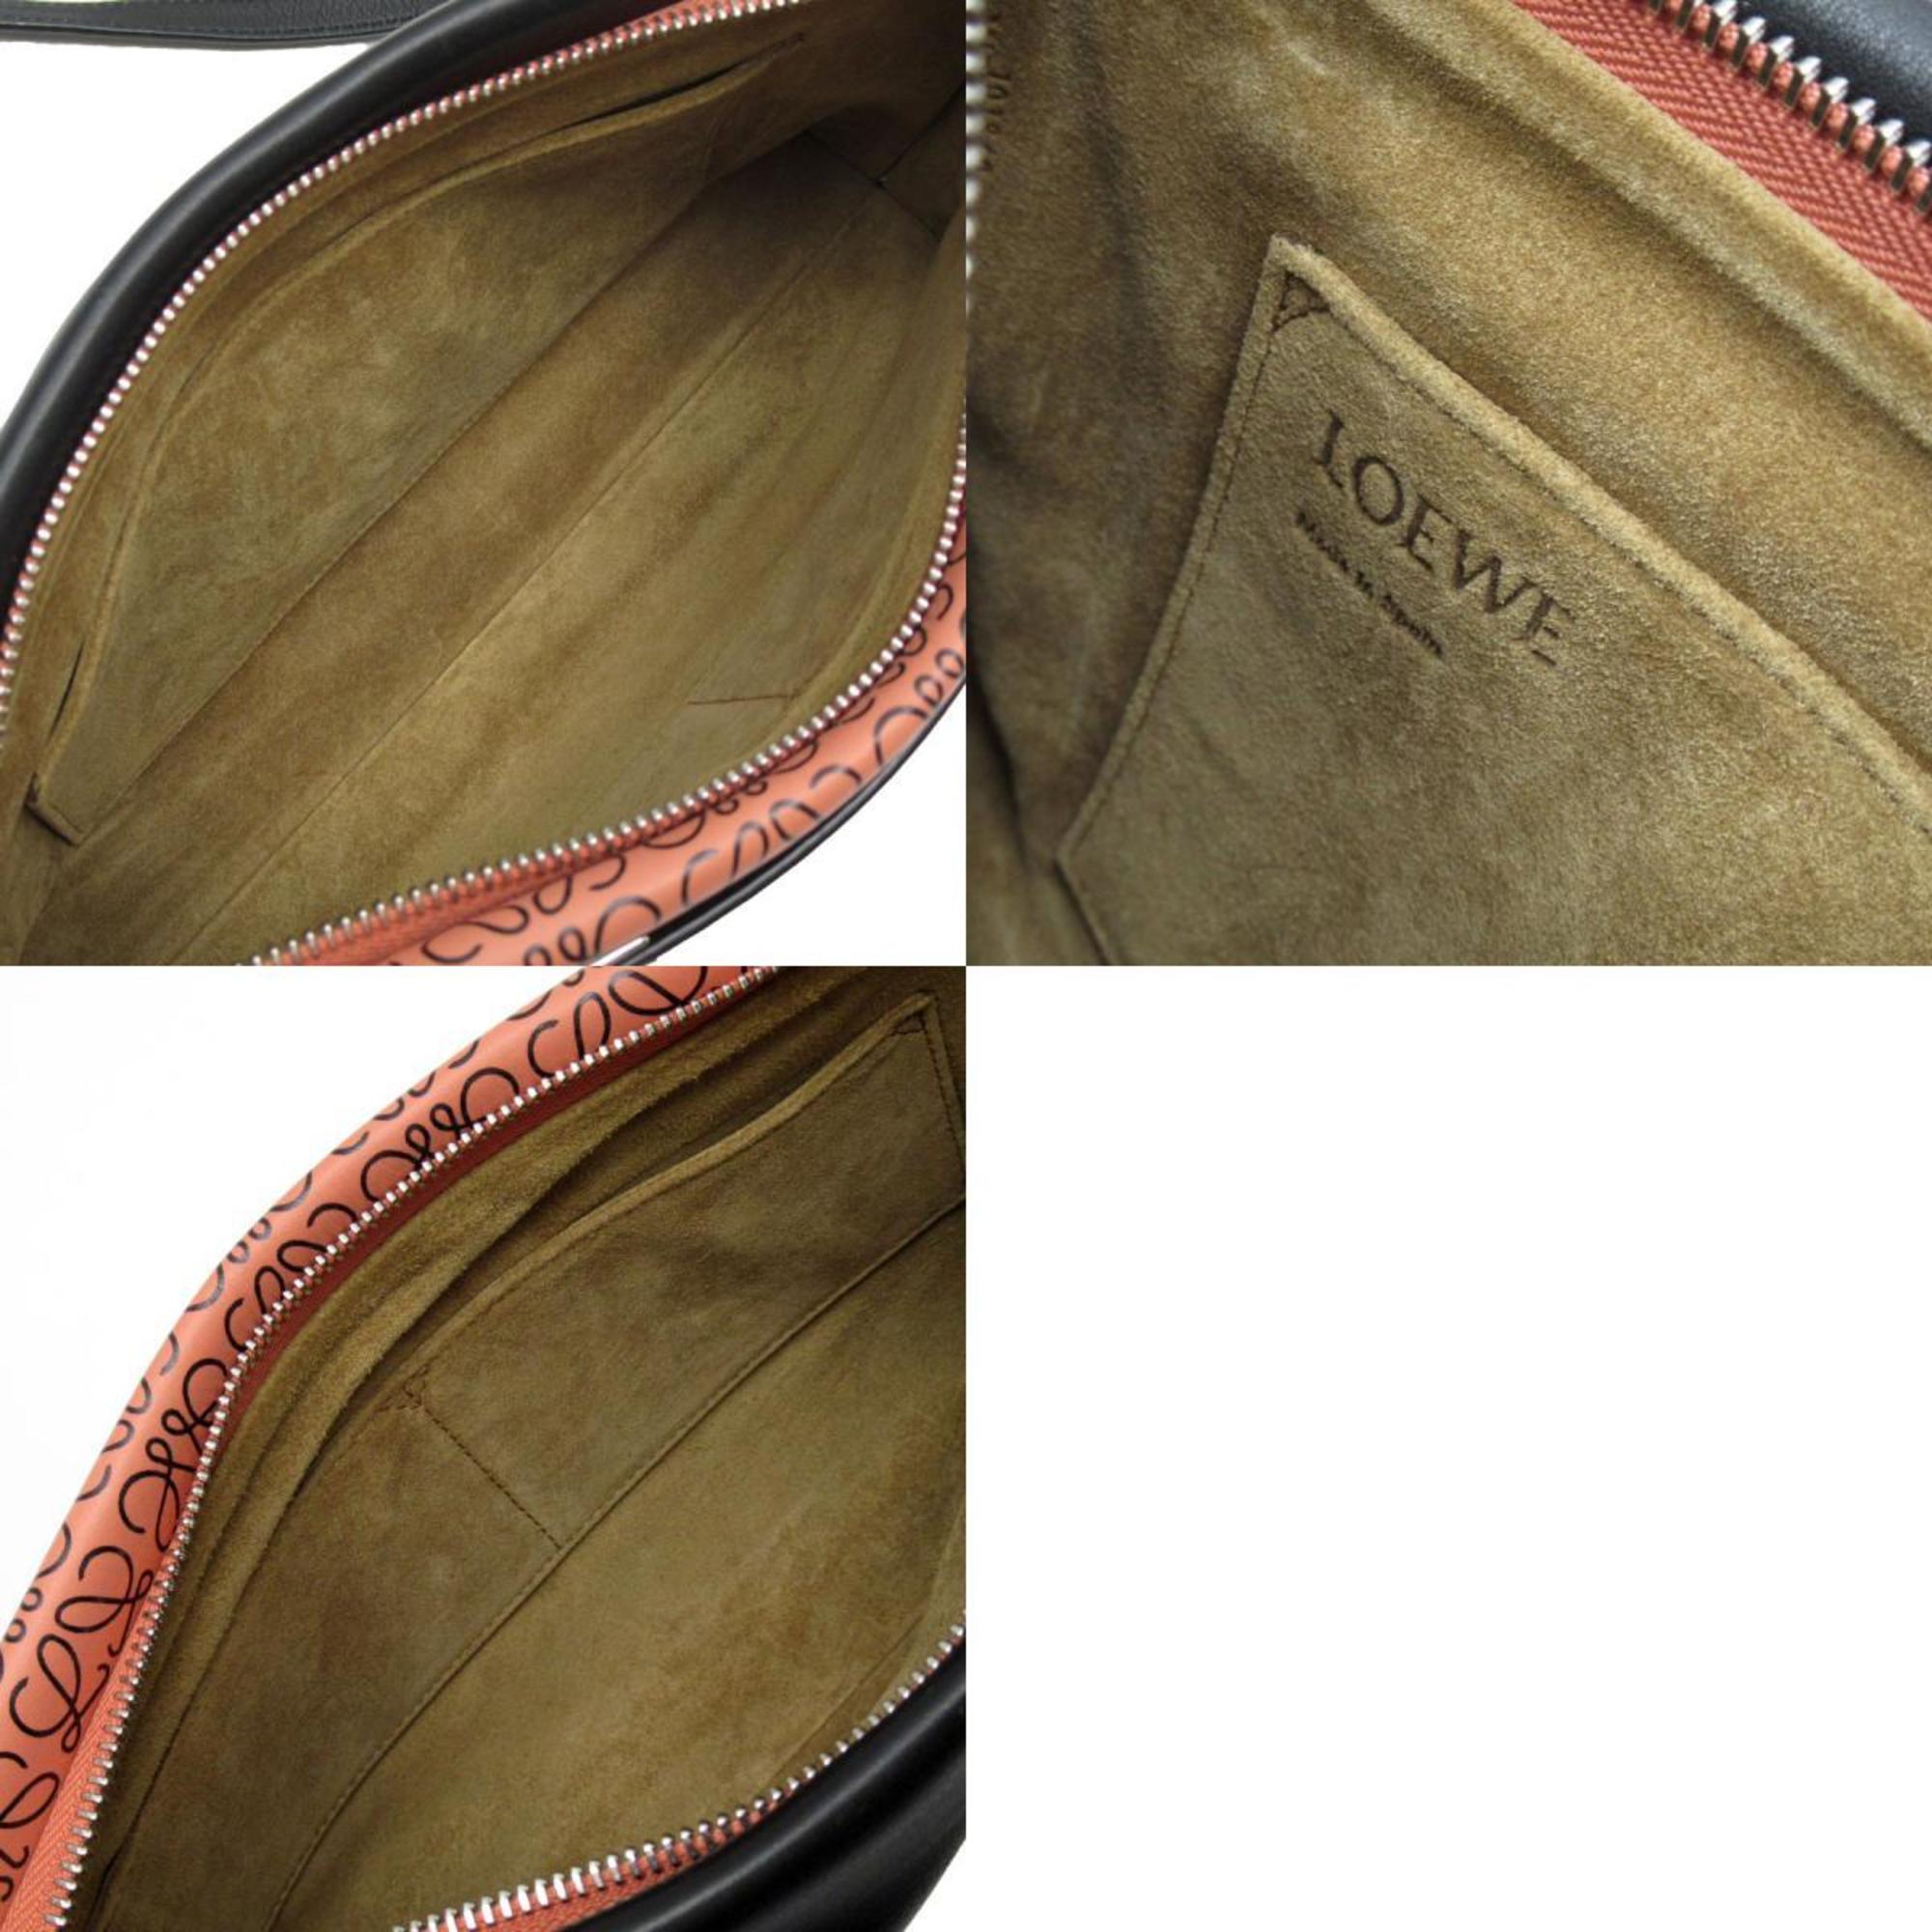 LOEWE Handbag Shoulder Bag Missy Small Leather Pink/Black Silver Women's w0122g